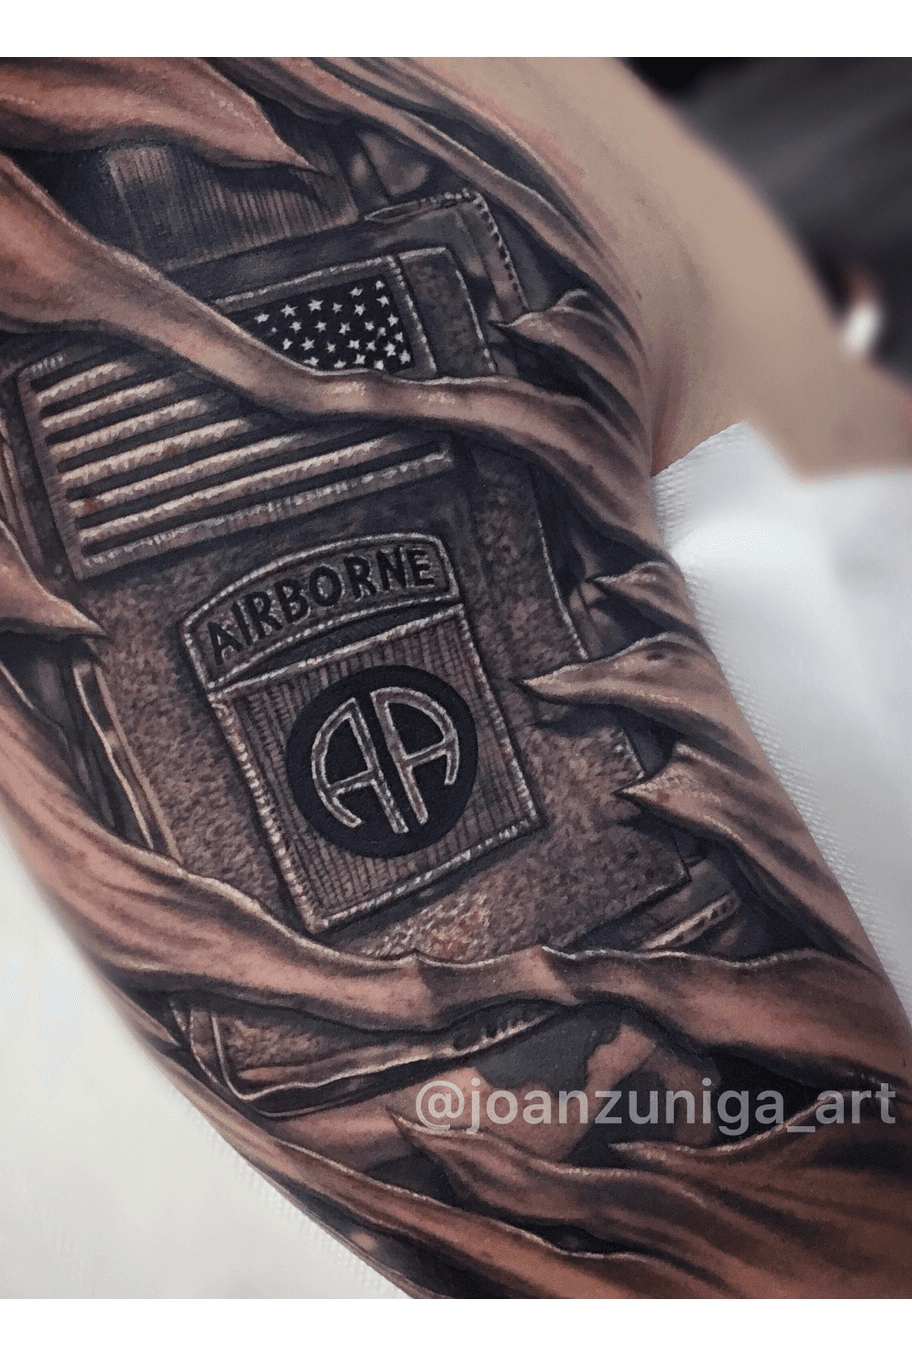 Army Airborne Tattoo  Airborne tattoos Army tattoos Tattoos